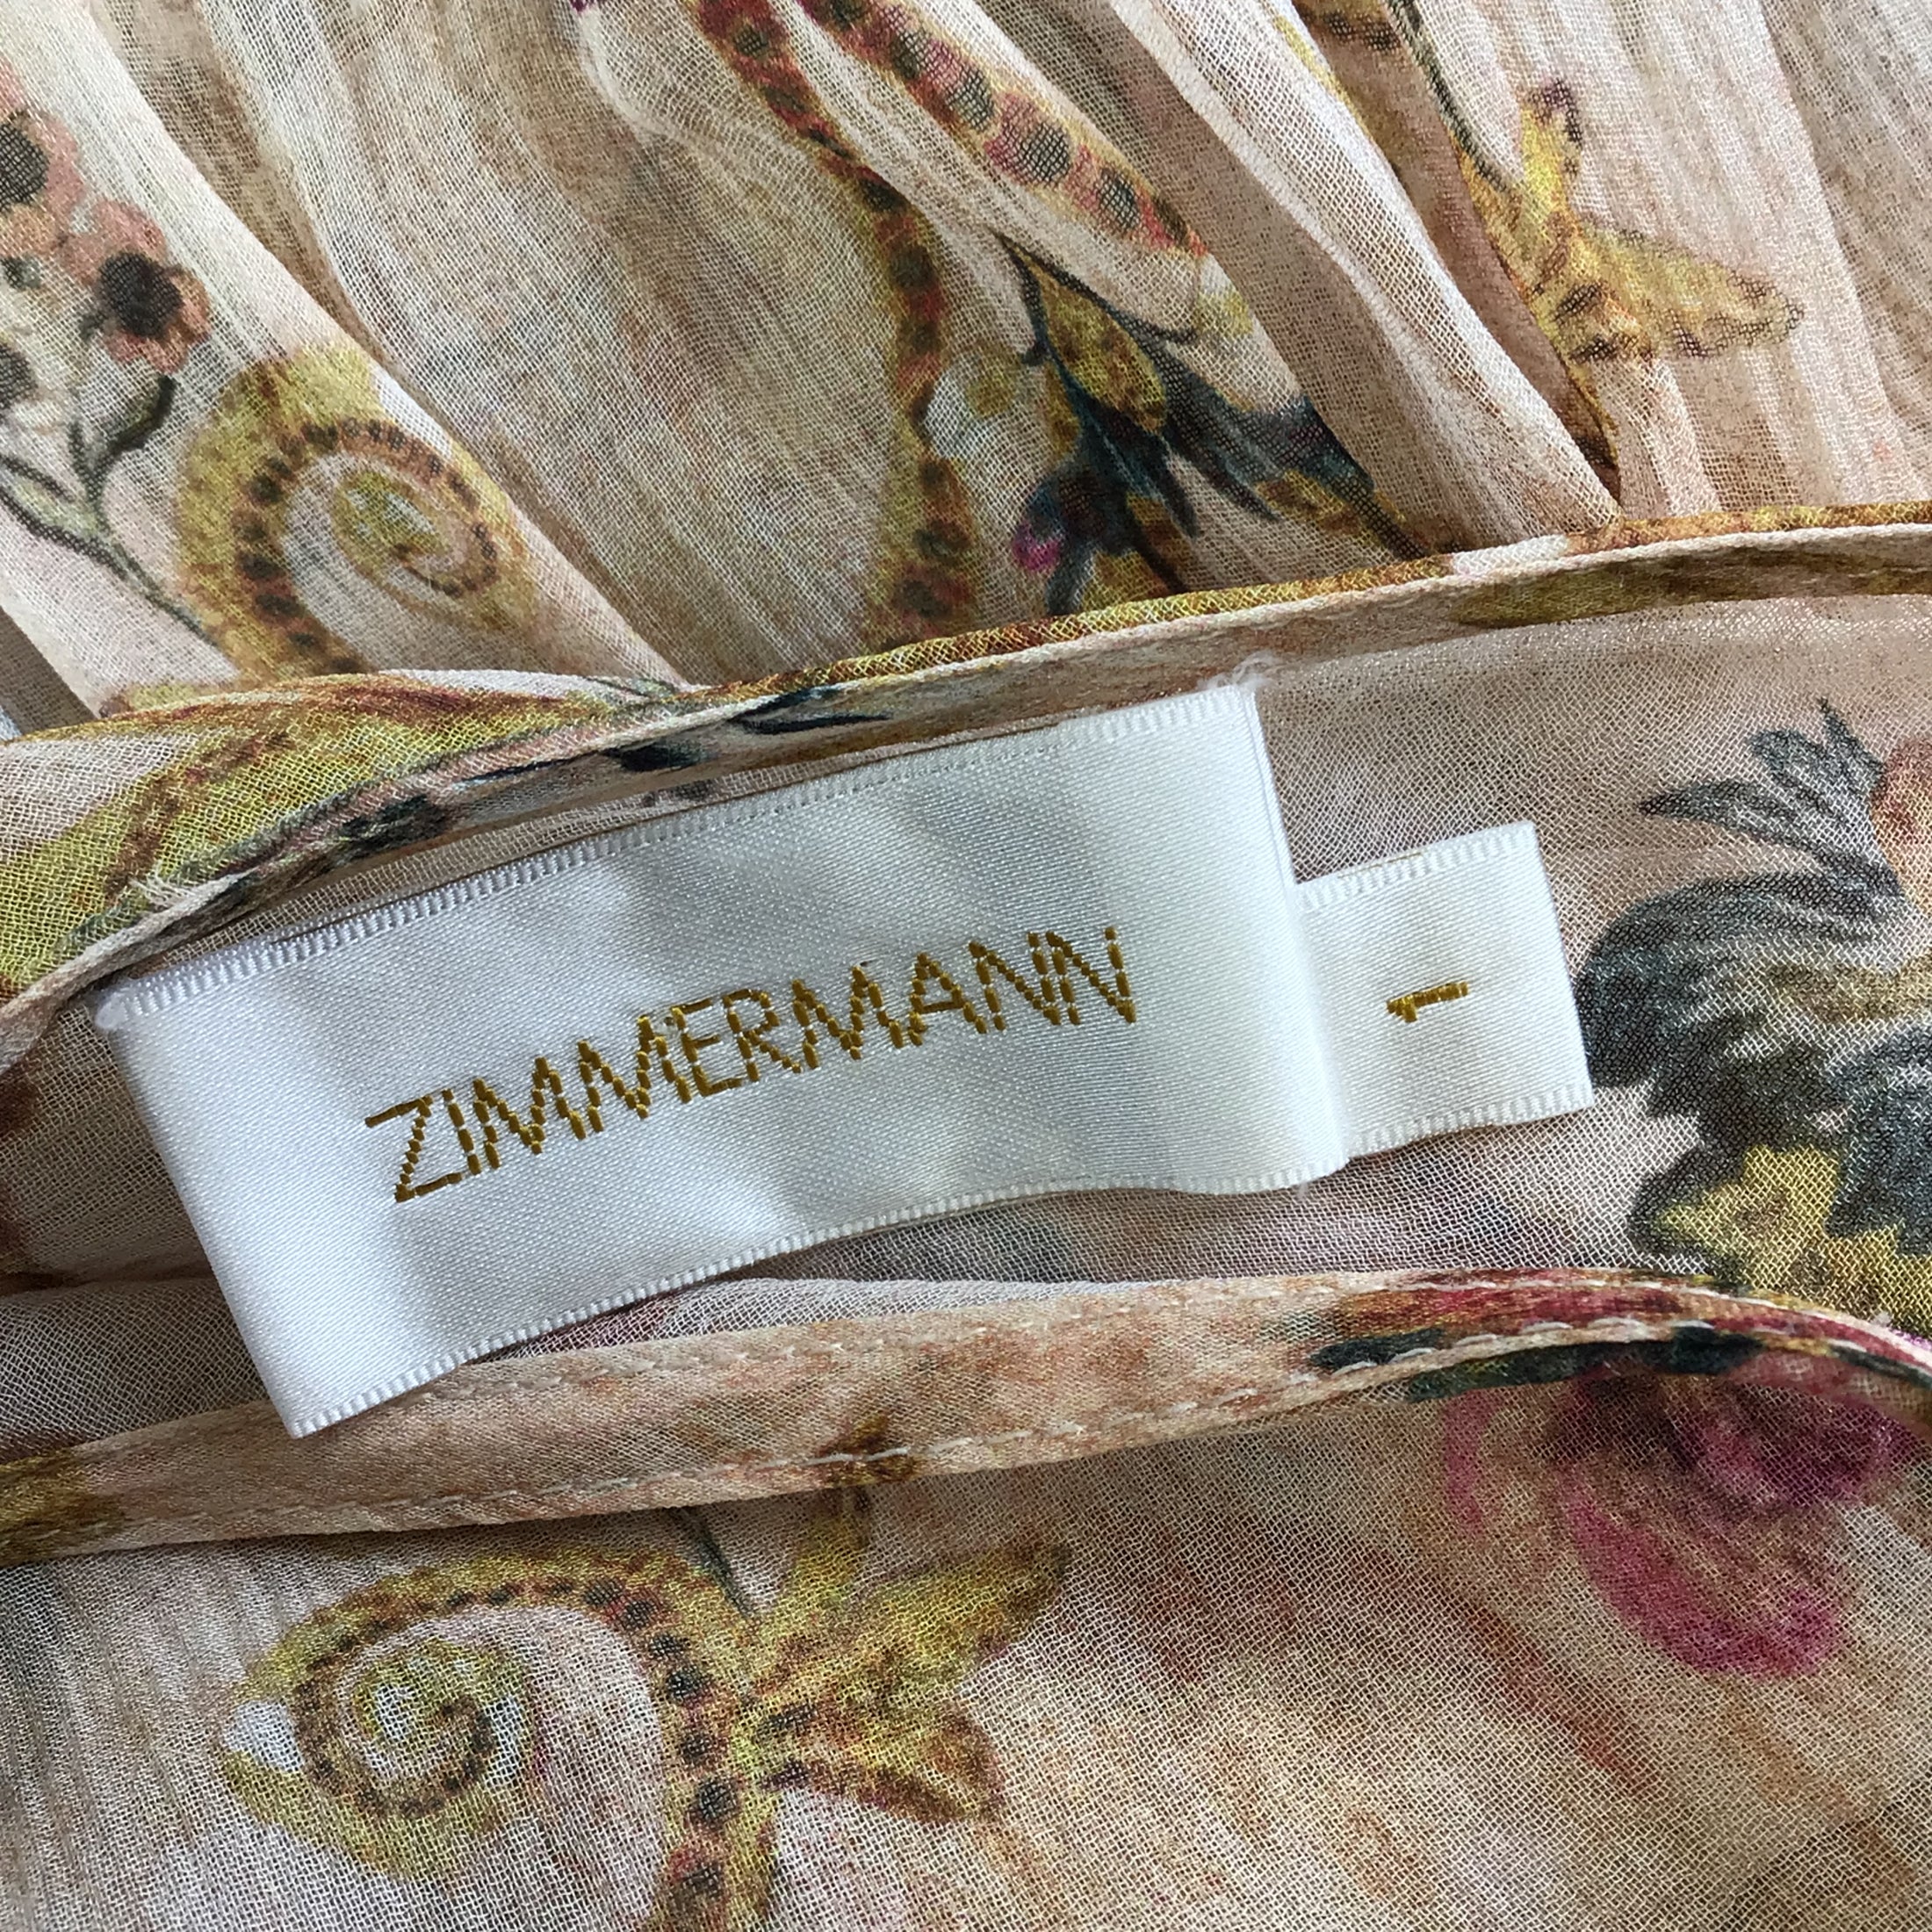 Zimmermann Beige Multi Floral Printed Belted Silk Midi Dress